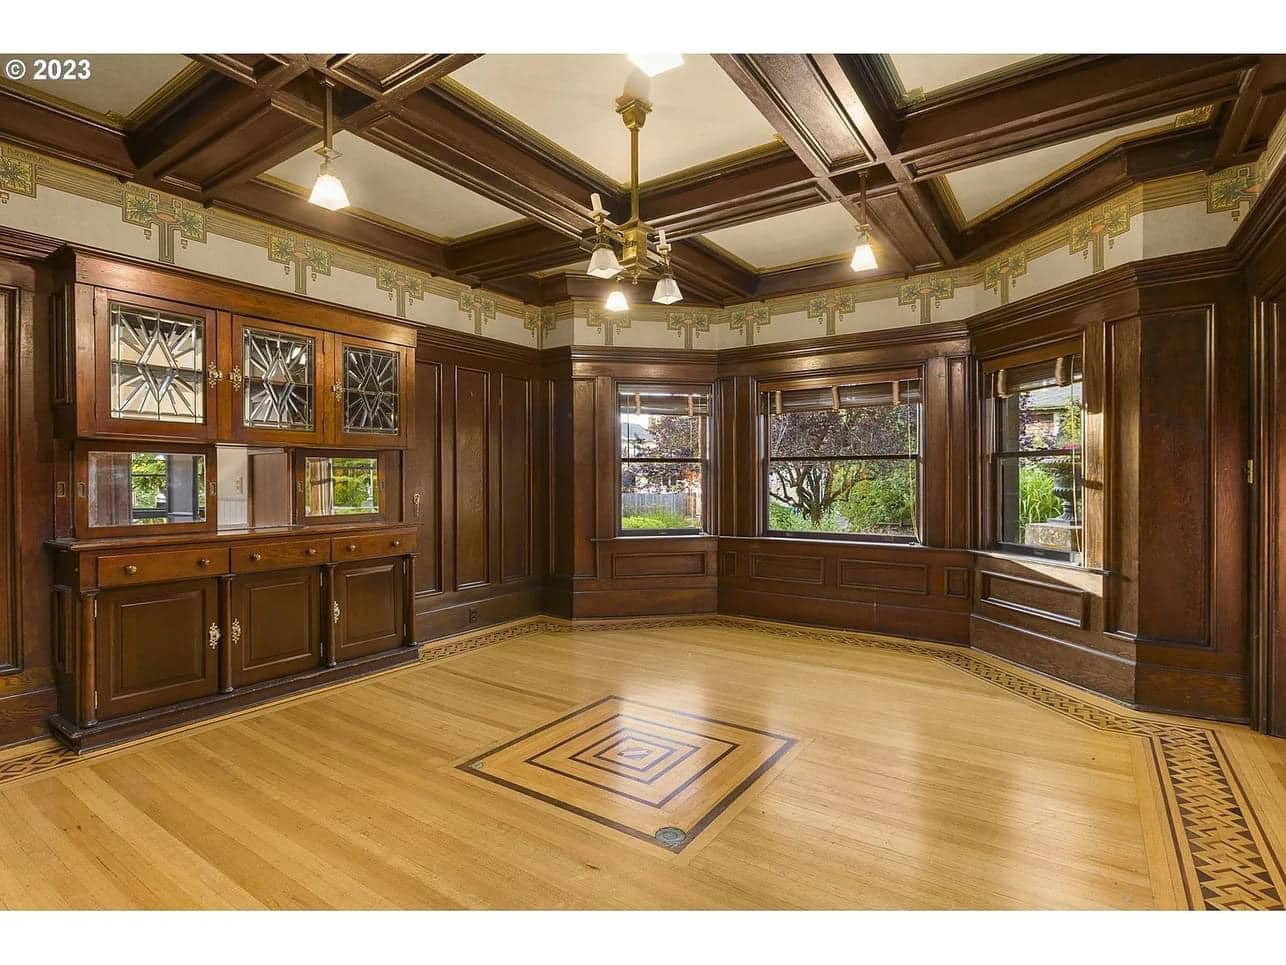 1909 Historic House For Sale In Portland Oregon